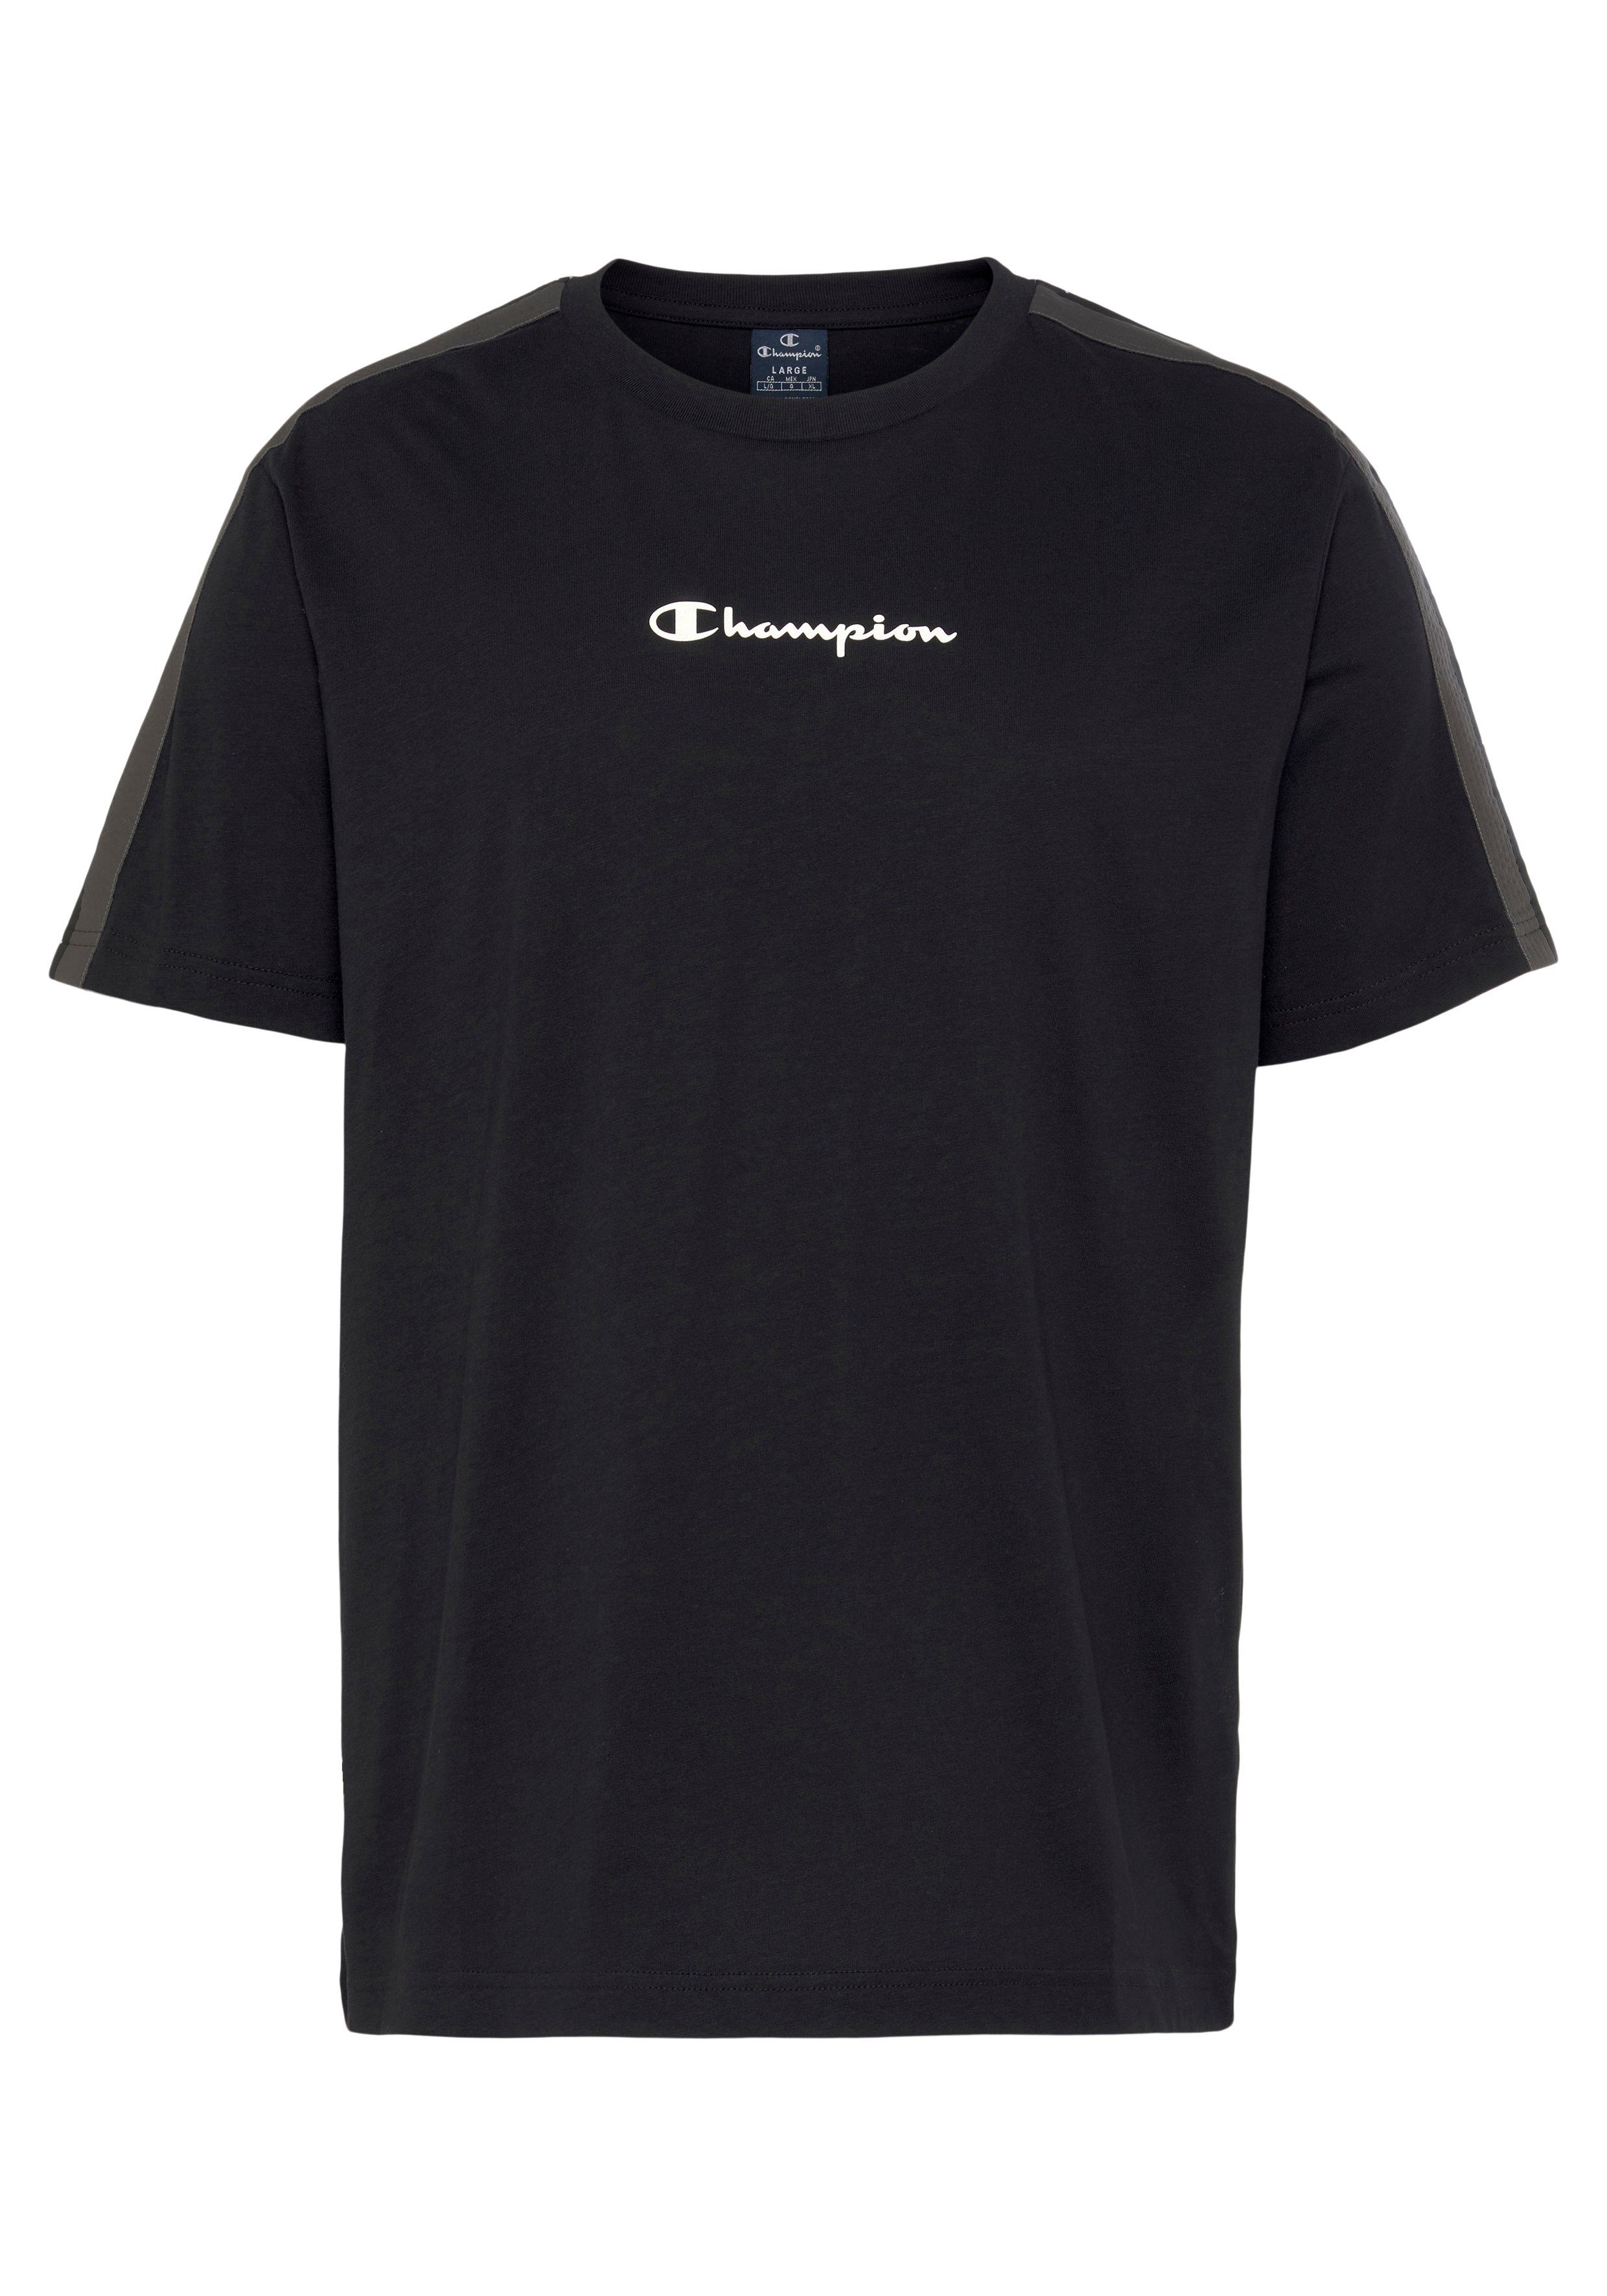 Champion T-Shirt Tape Crewneck T-Shirt small logo schwarz